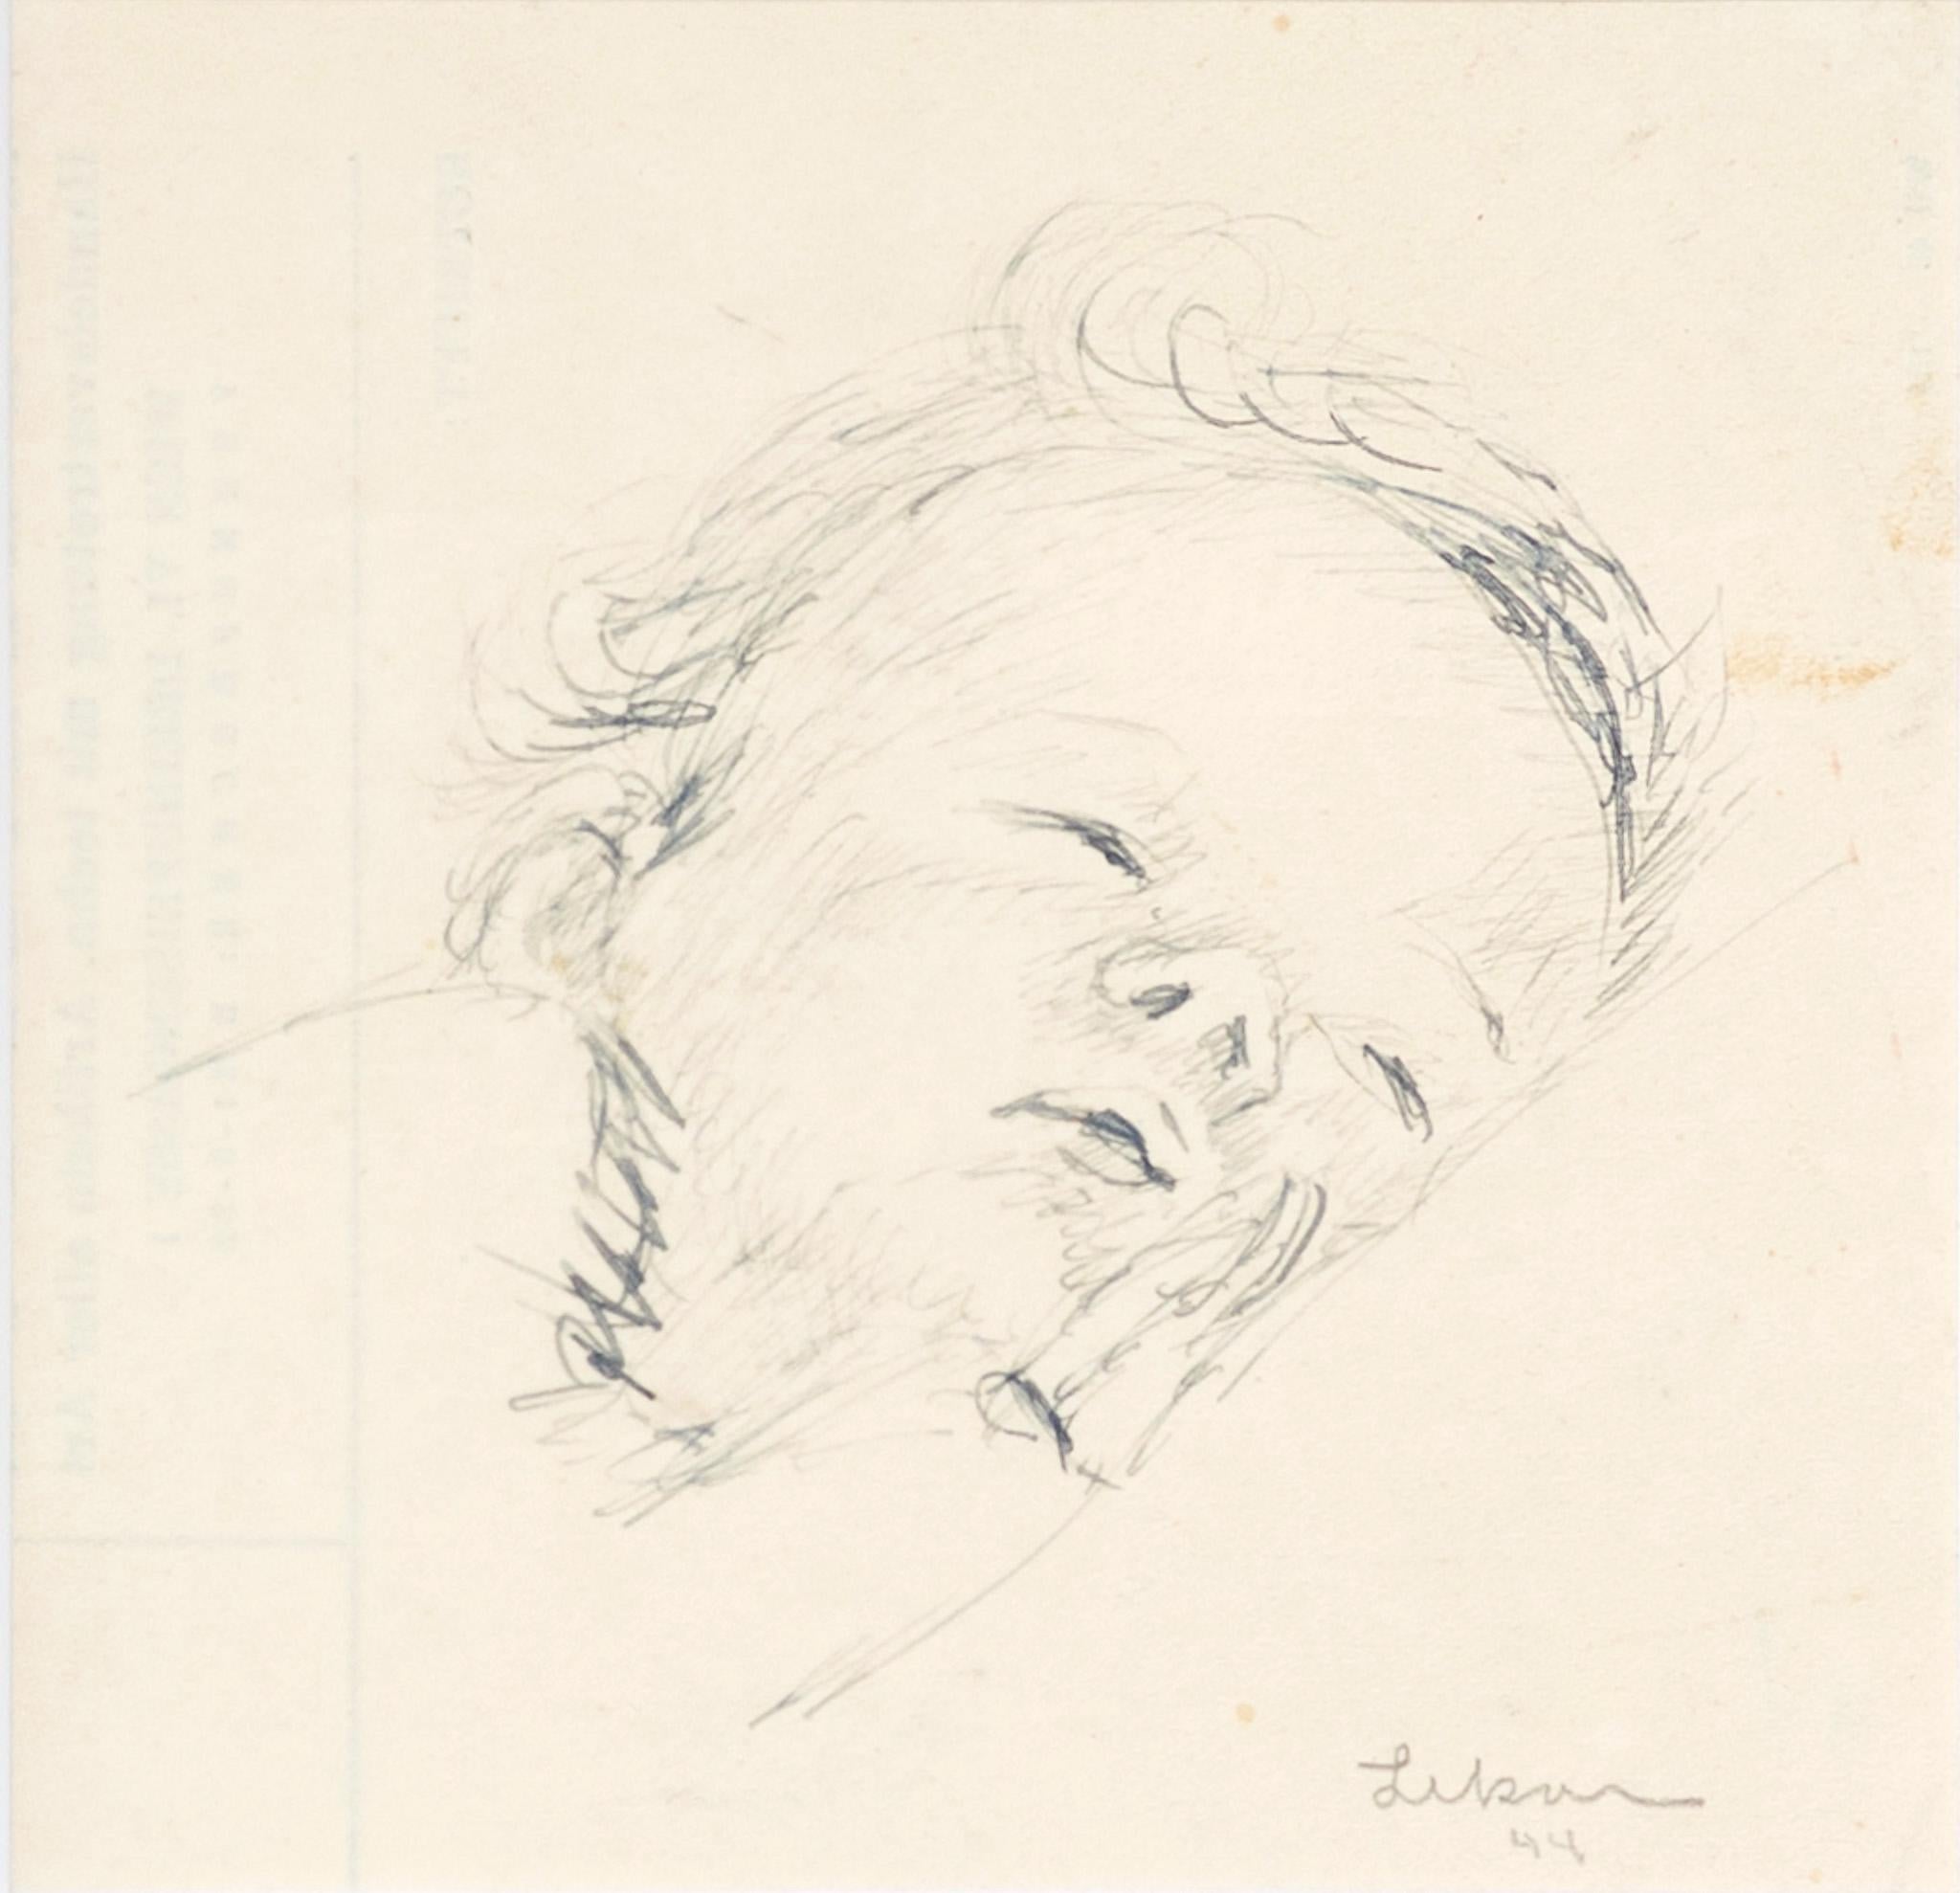 Gustav Likan Portrait - "Sleeping Infant" Sketch